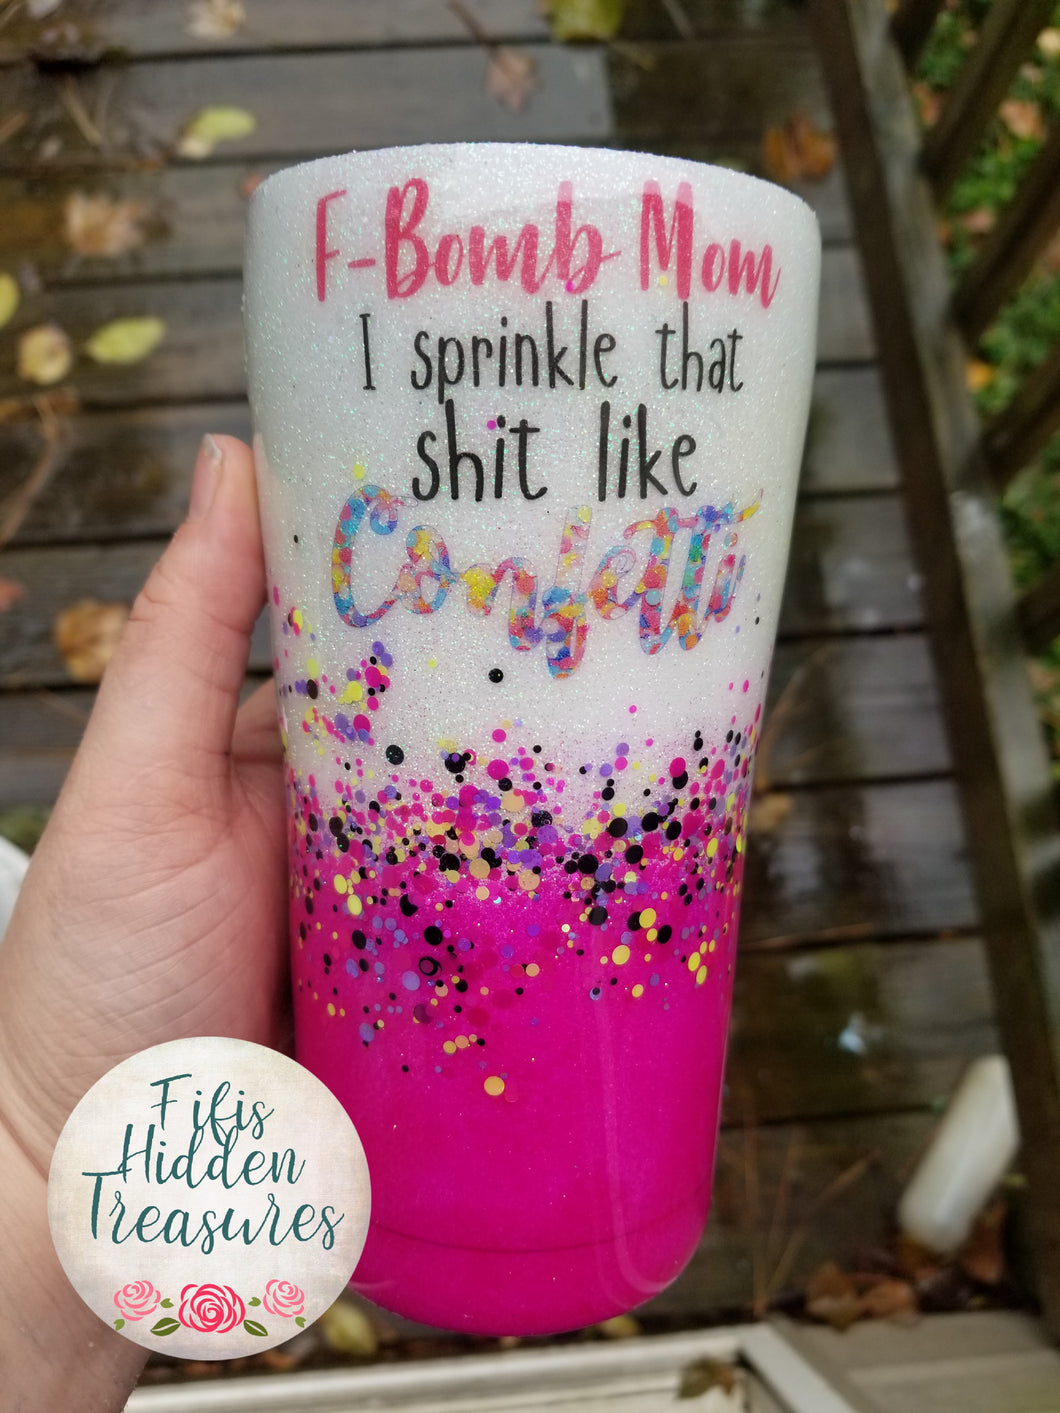 F-bomb mom